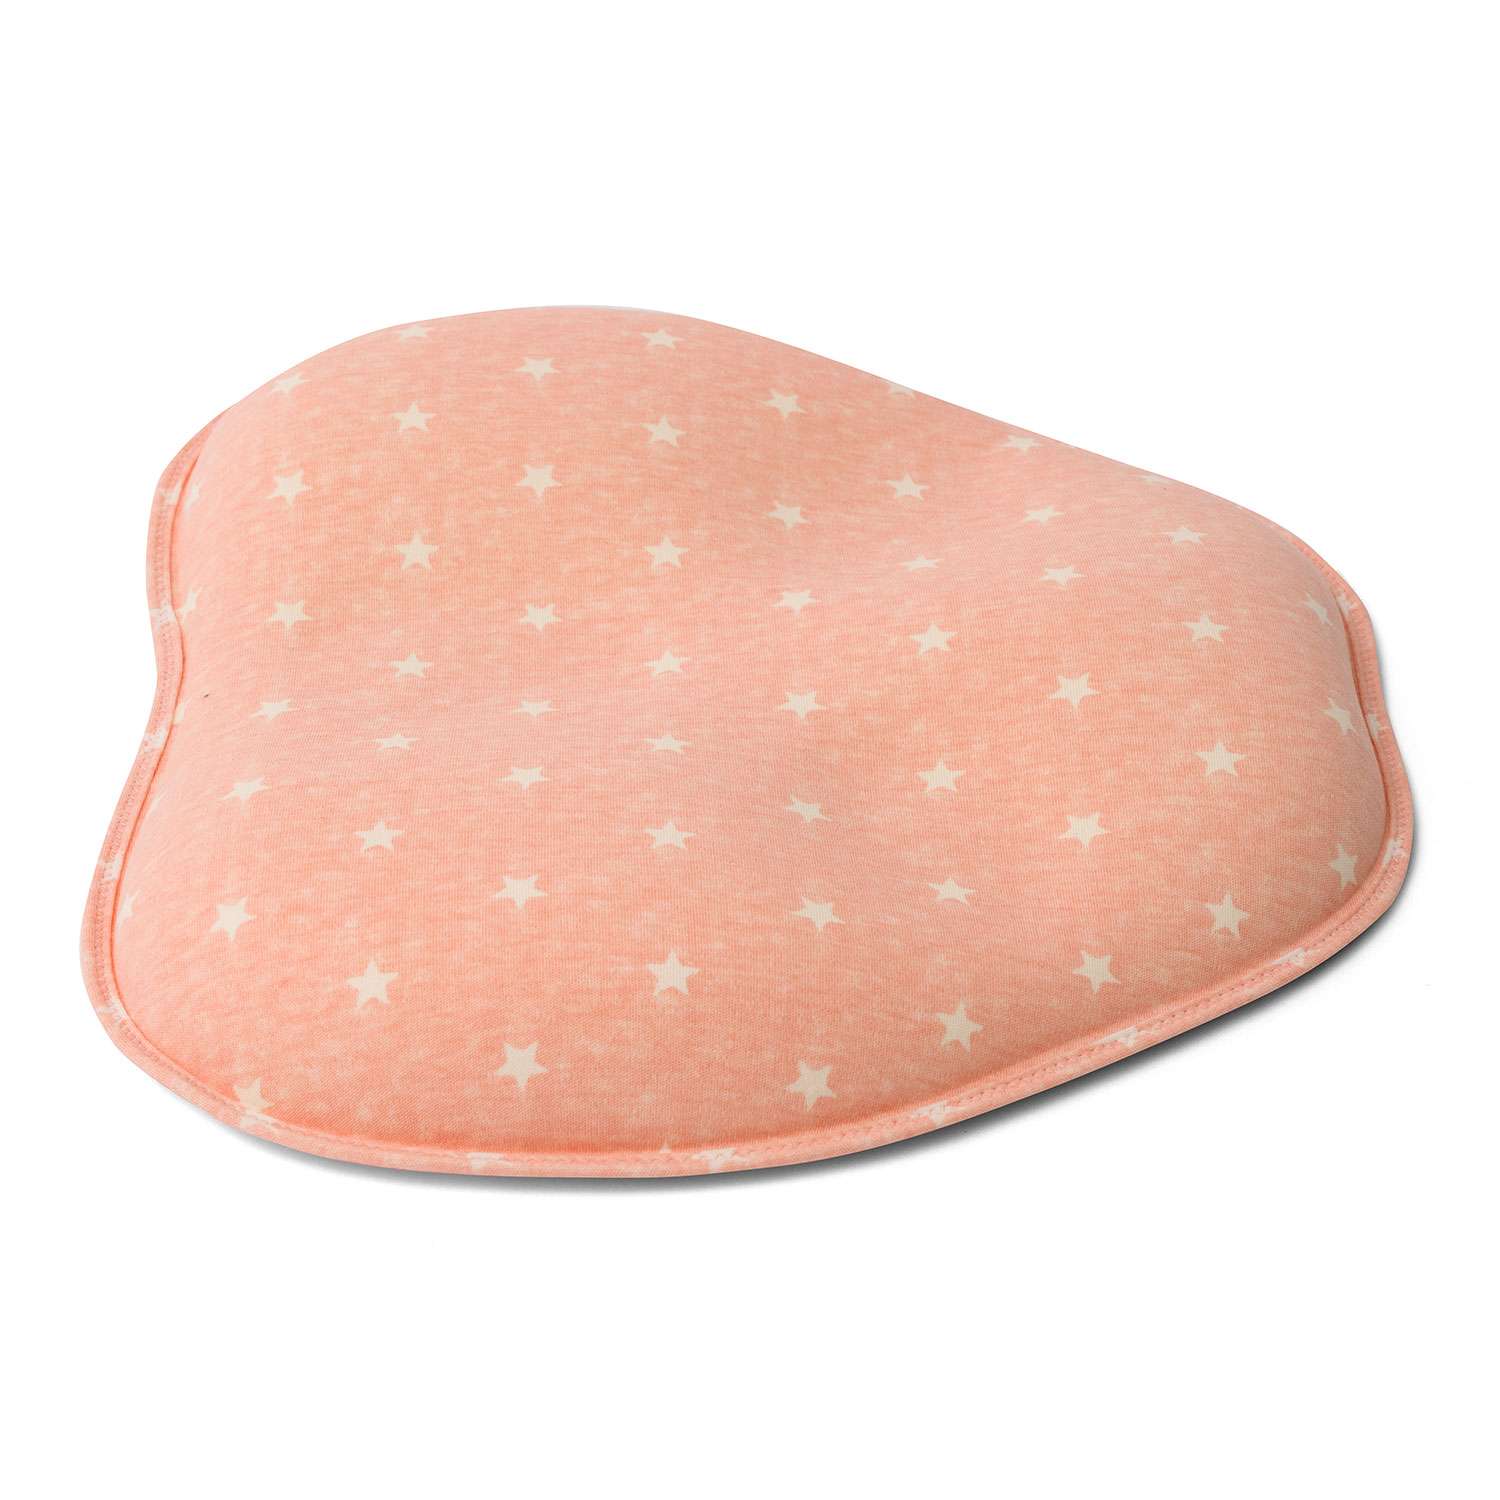 Подушка для новорожденного Nuovita Neonutti Trio Dipinto Звезды розовая - фото 14